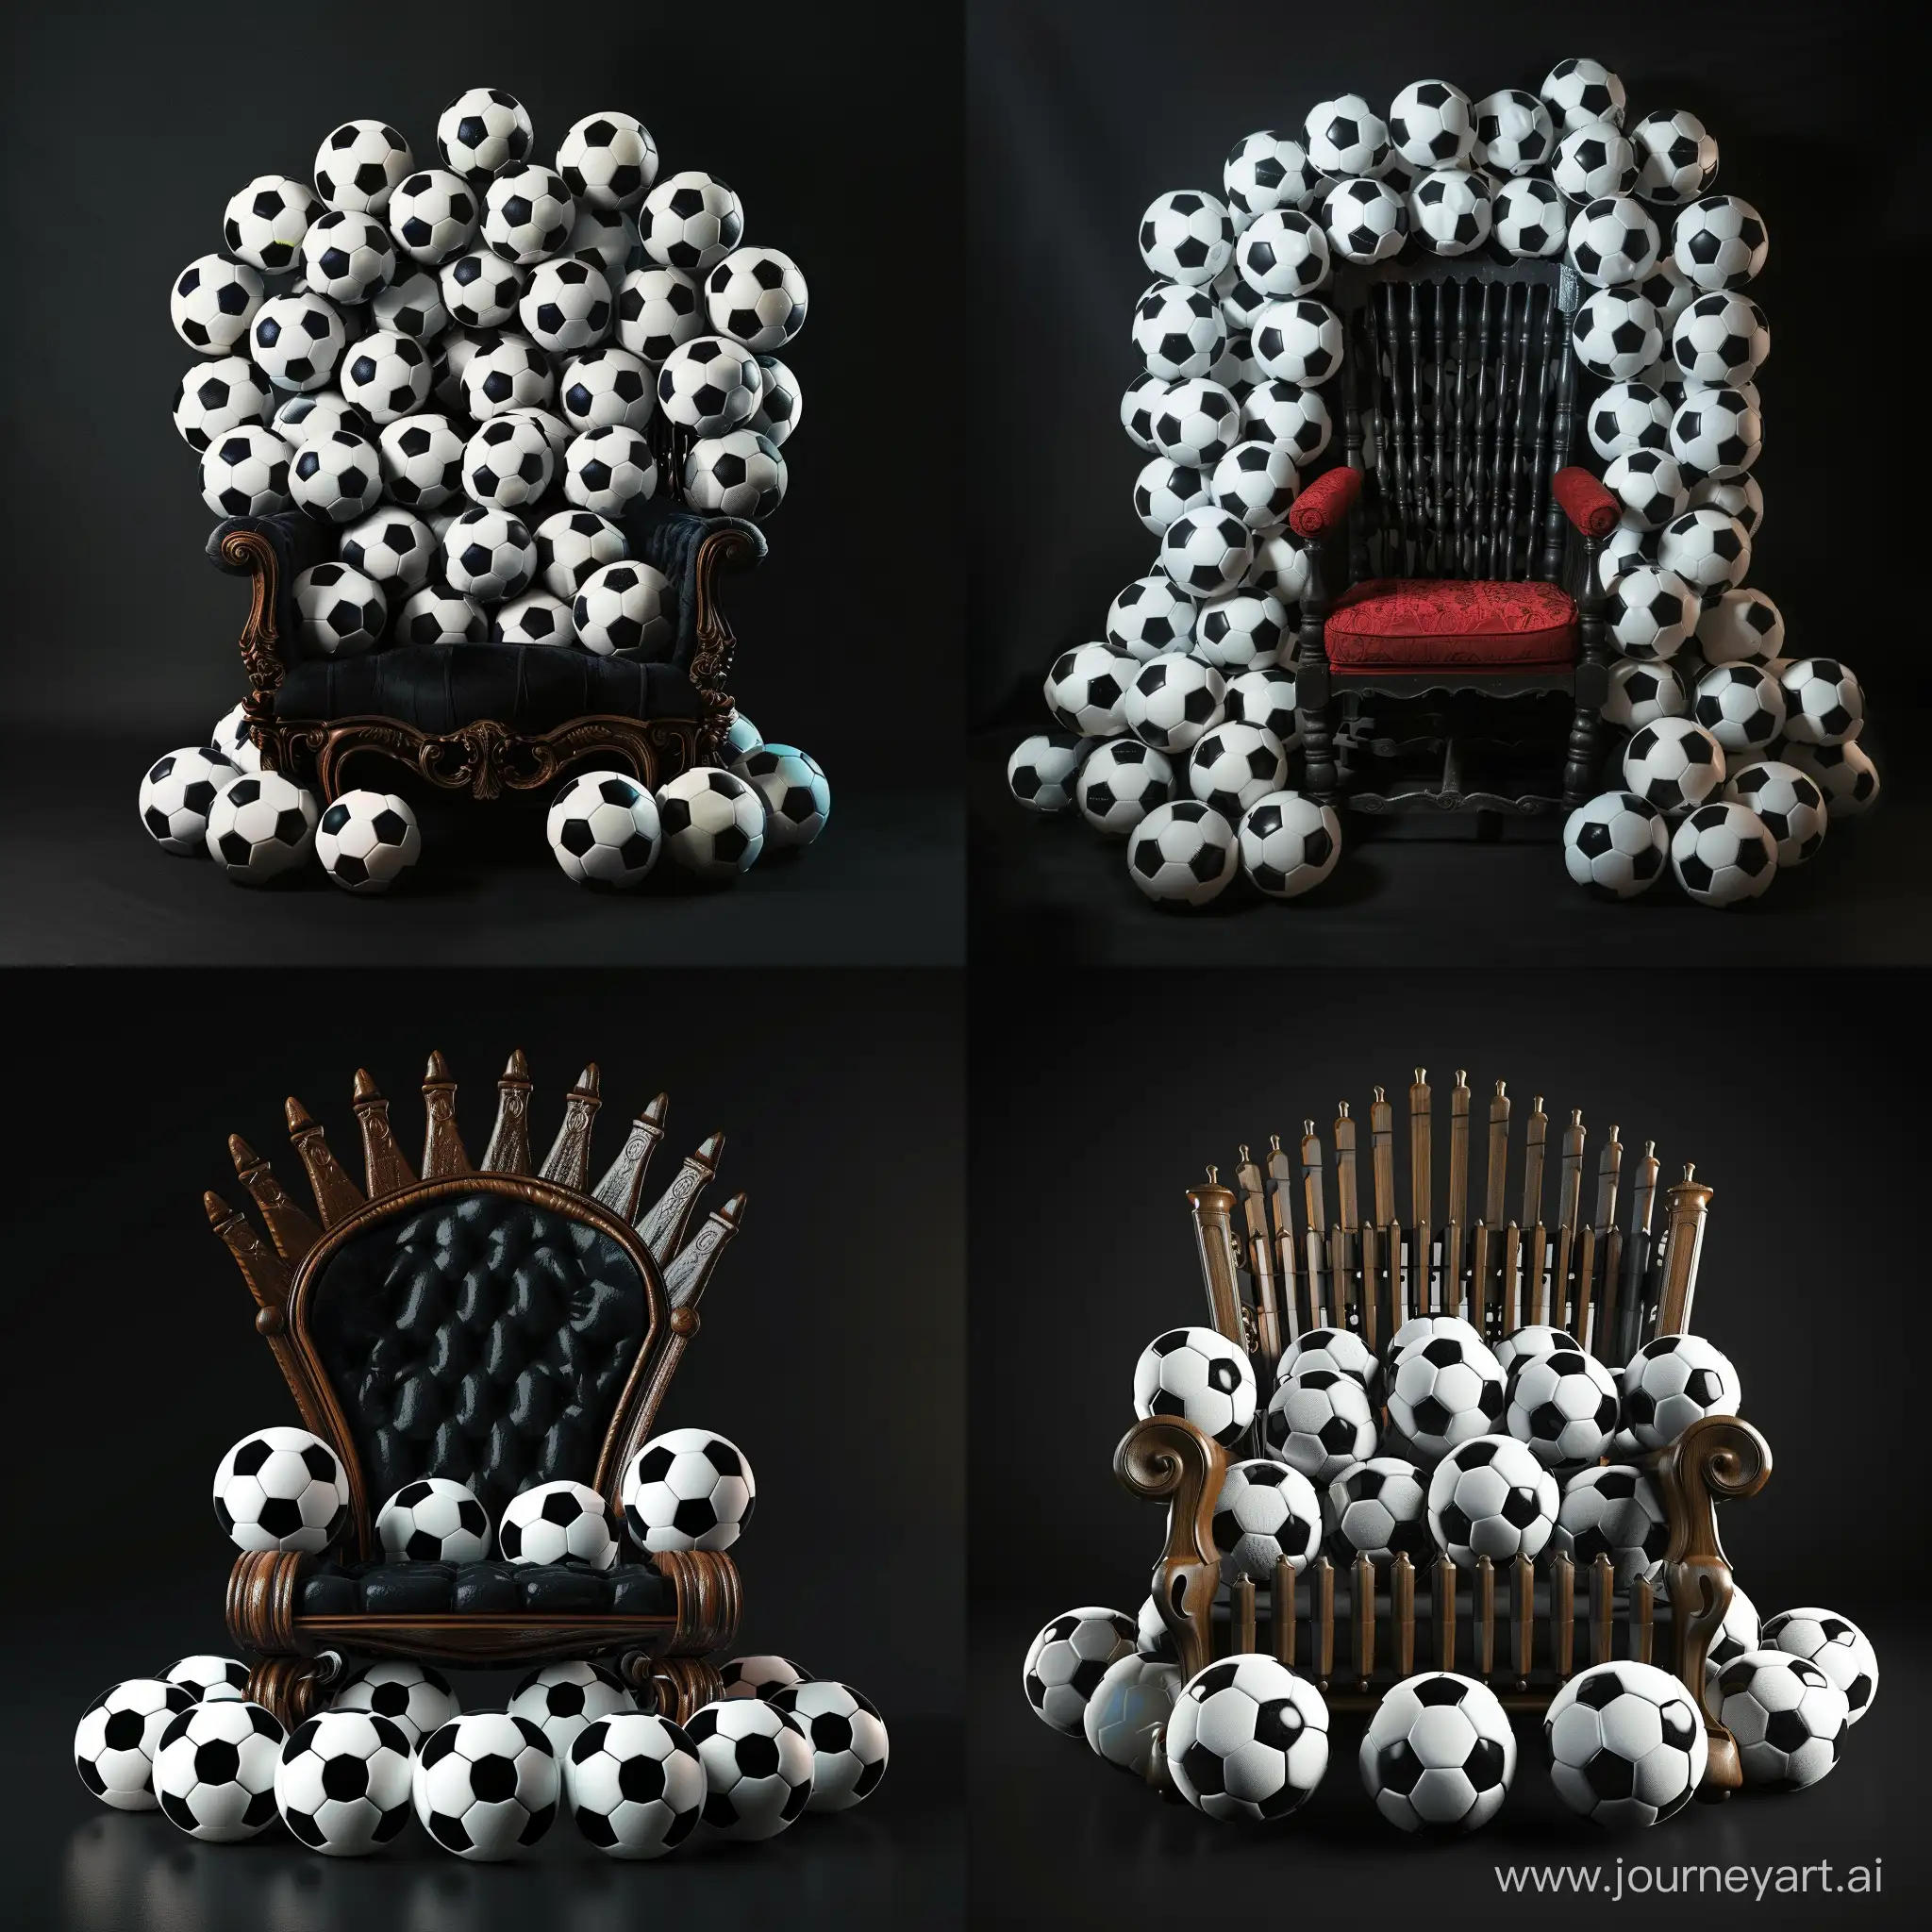 throne of soccer balls on black background